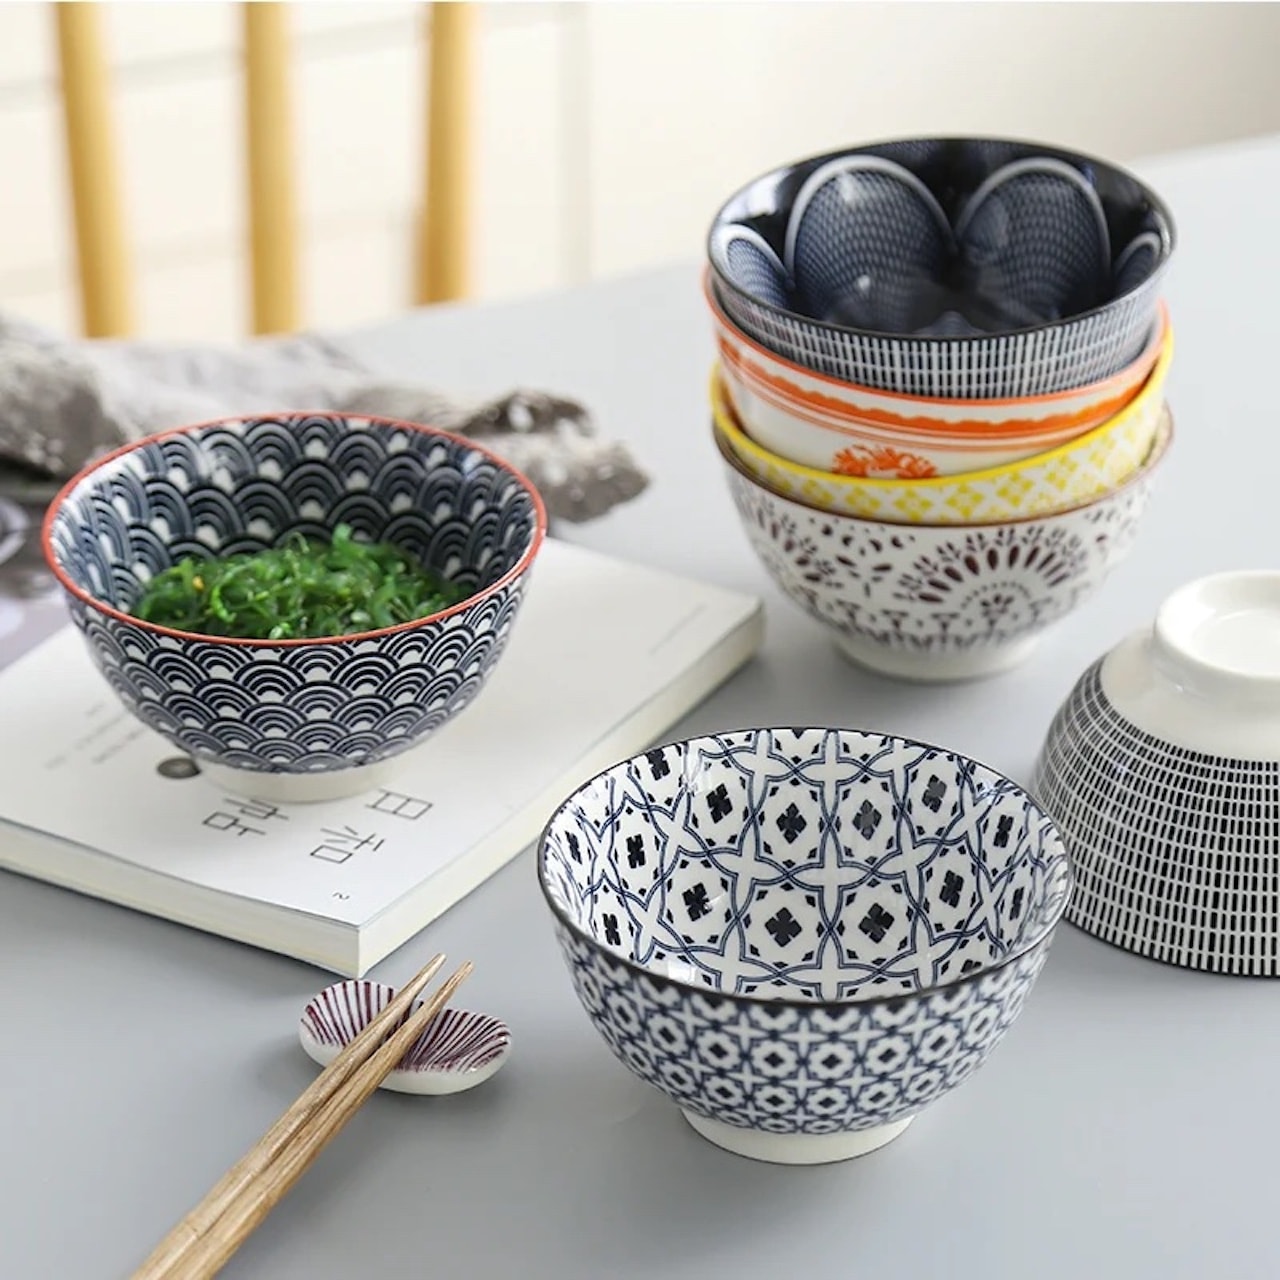 creative ways display travel souvenirs at home ceramic rice bowls